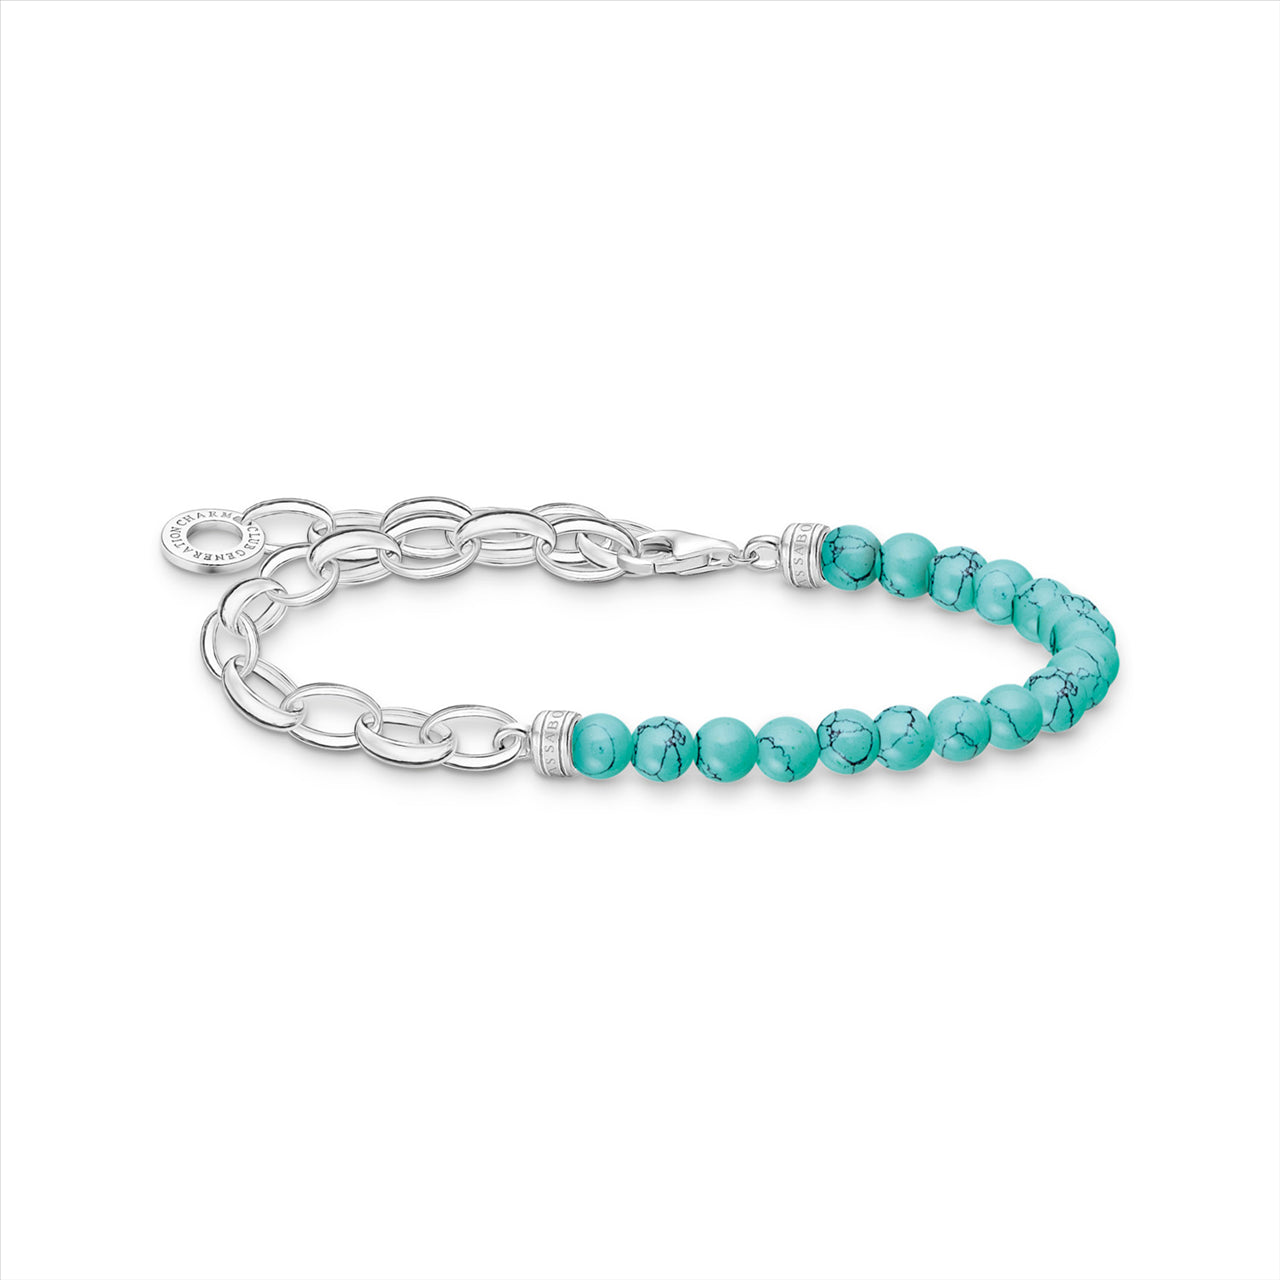 Thomas Sabo Chain and Turquoise Bead Bracelet